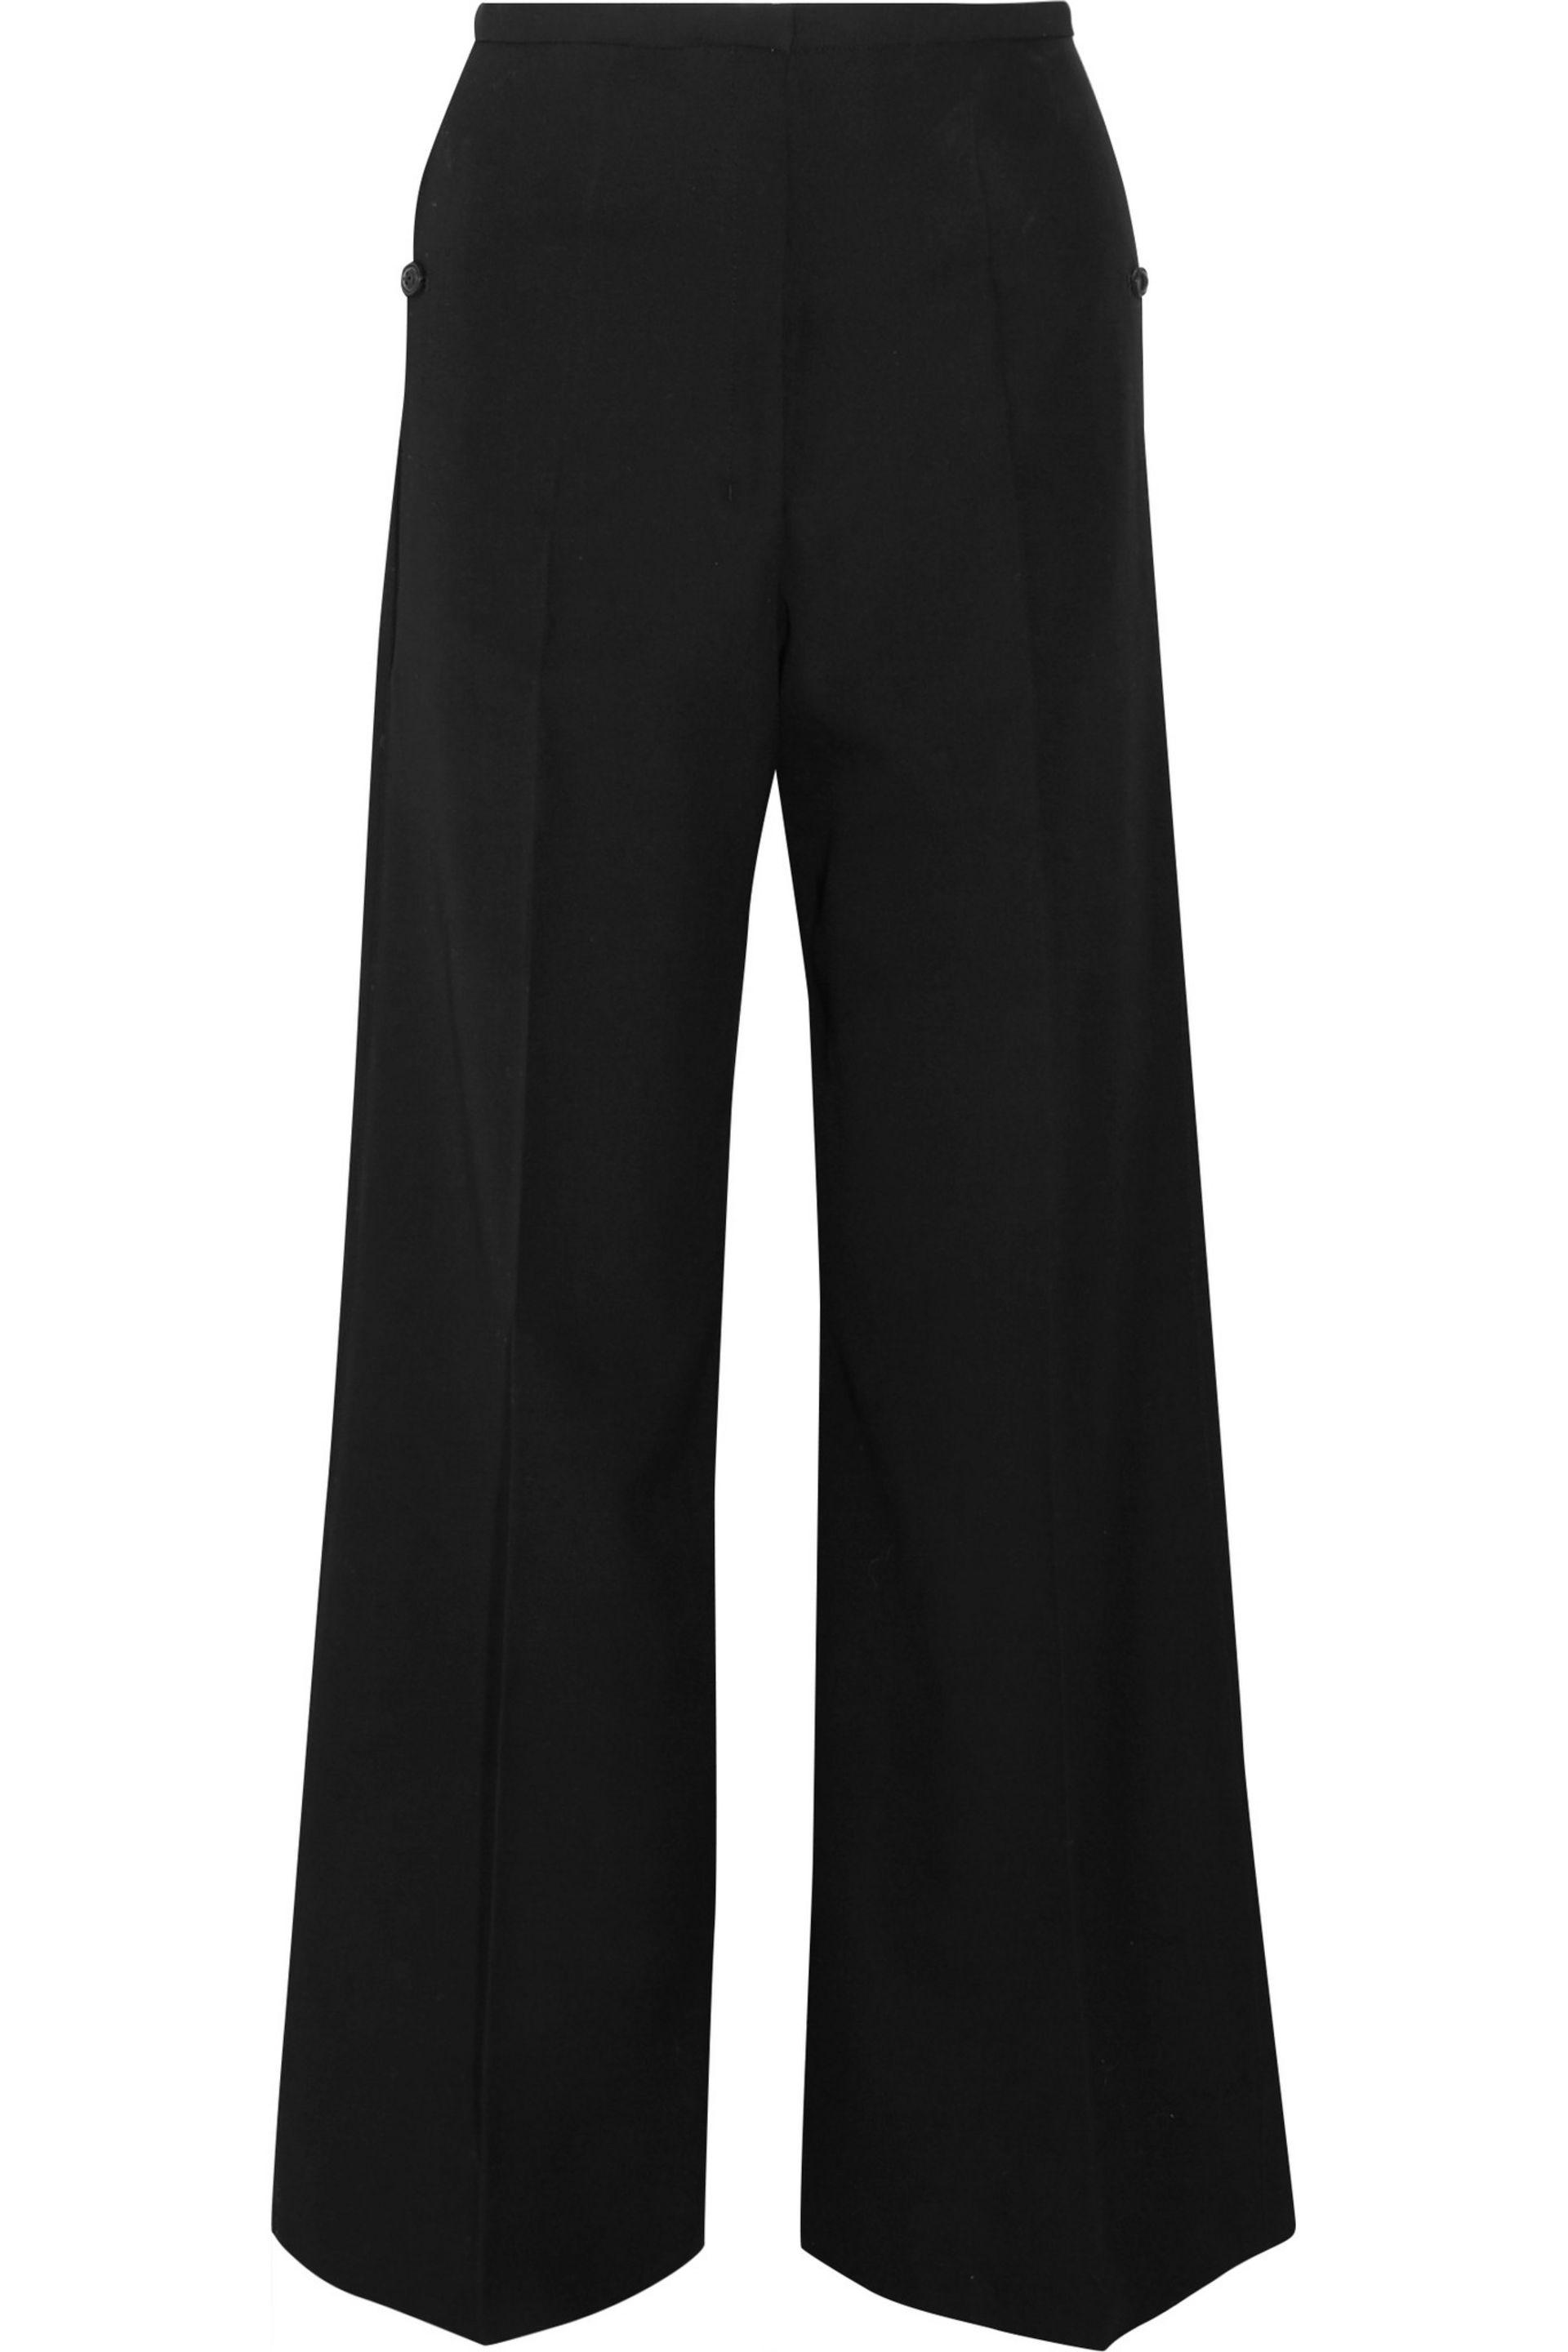 Lemaire Wool Wide-leg Pants in Black - Lyst